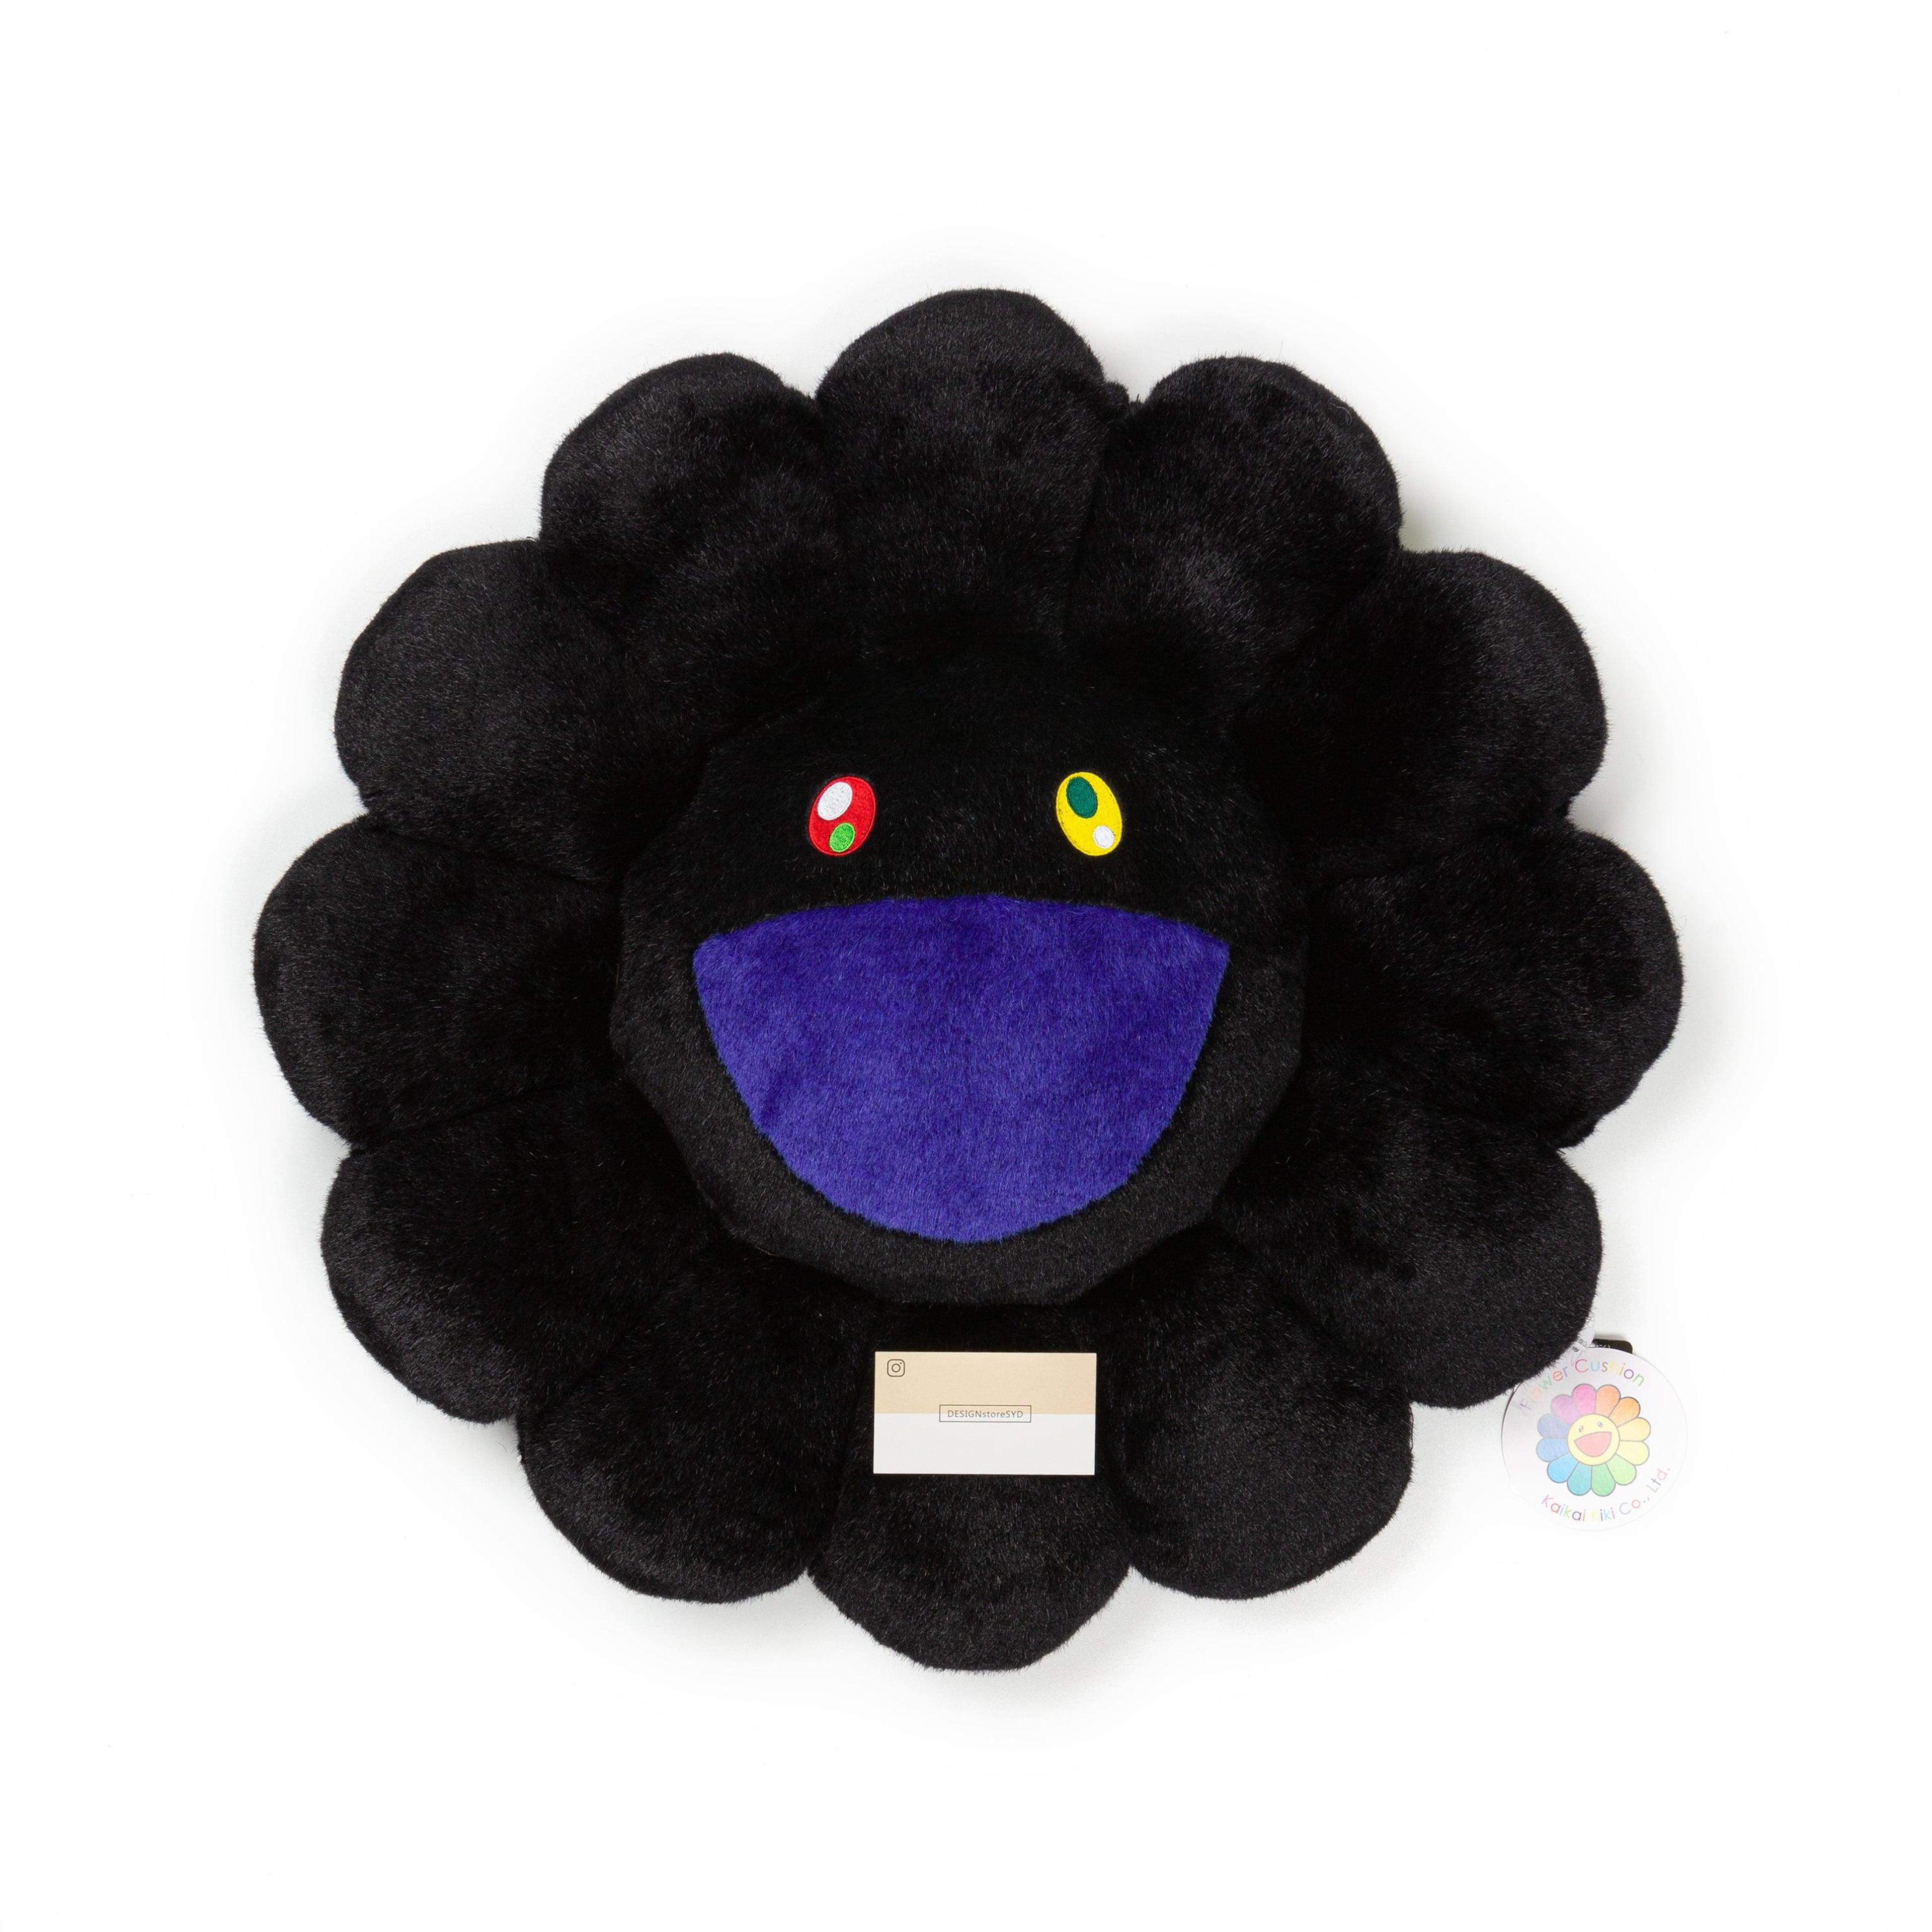 Takashi Murakami Flower Pillow Cushion All Black